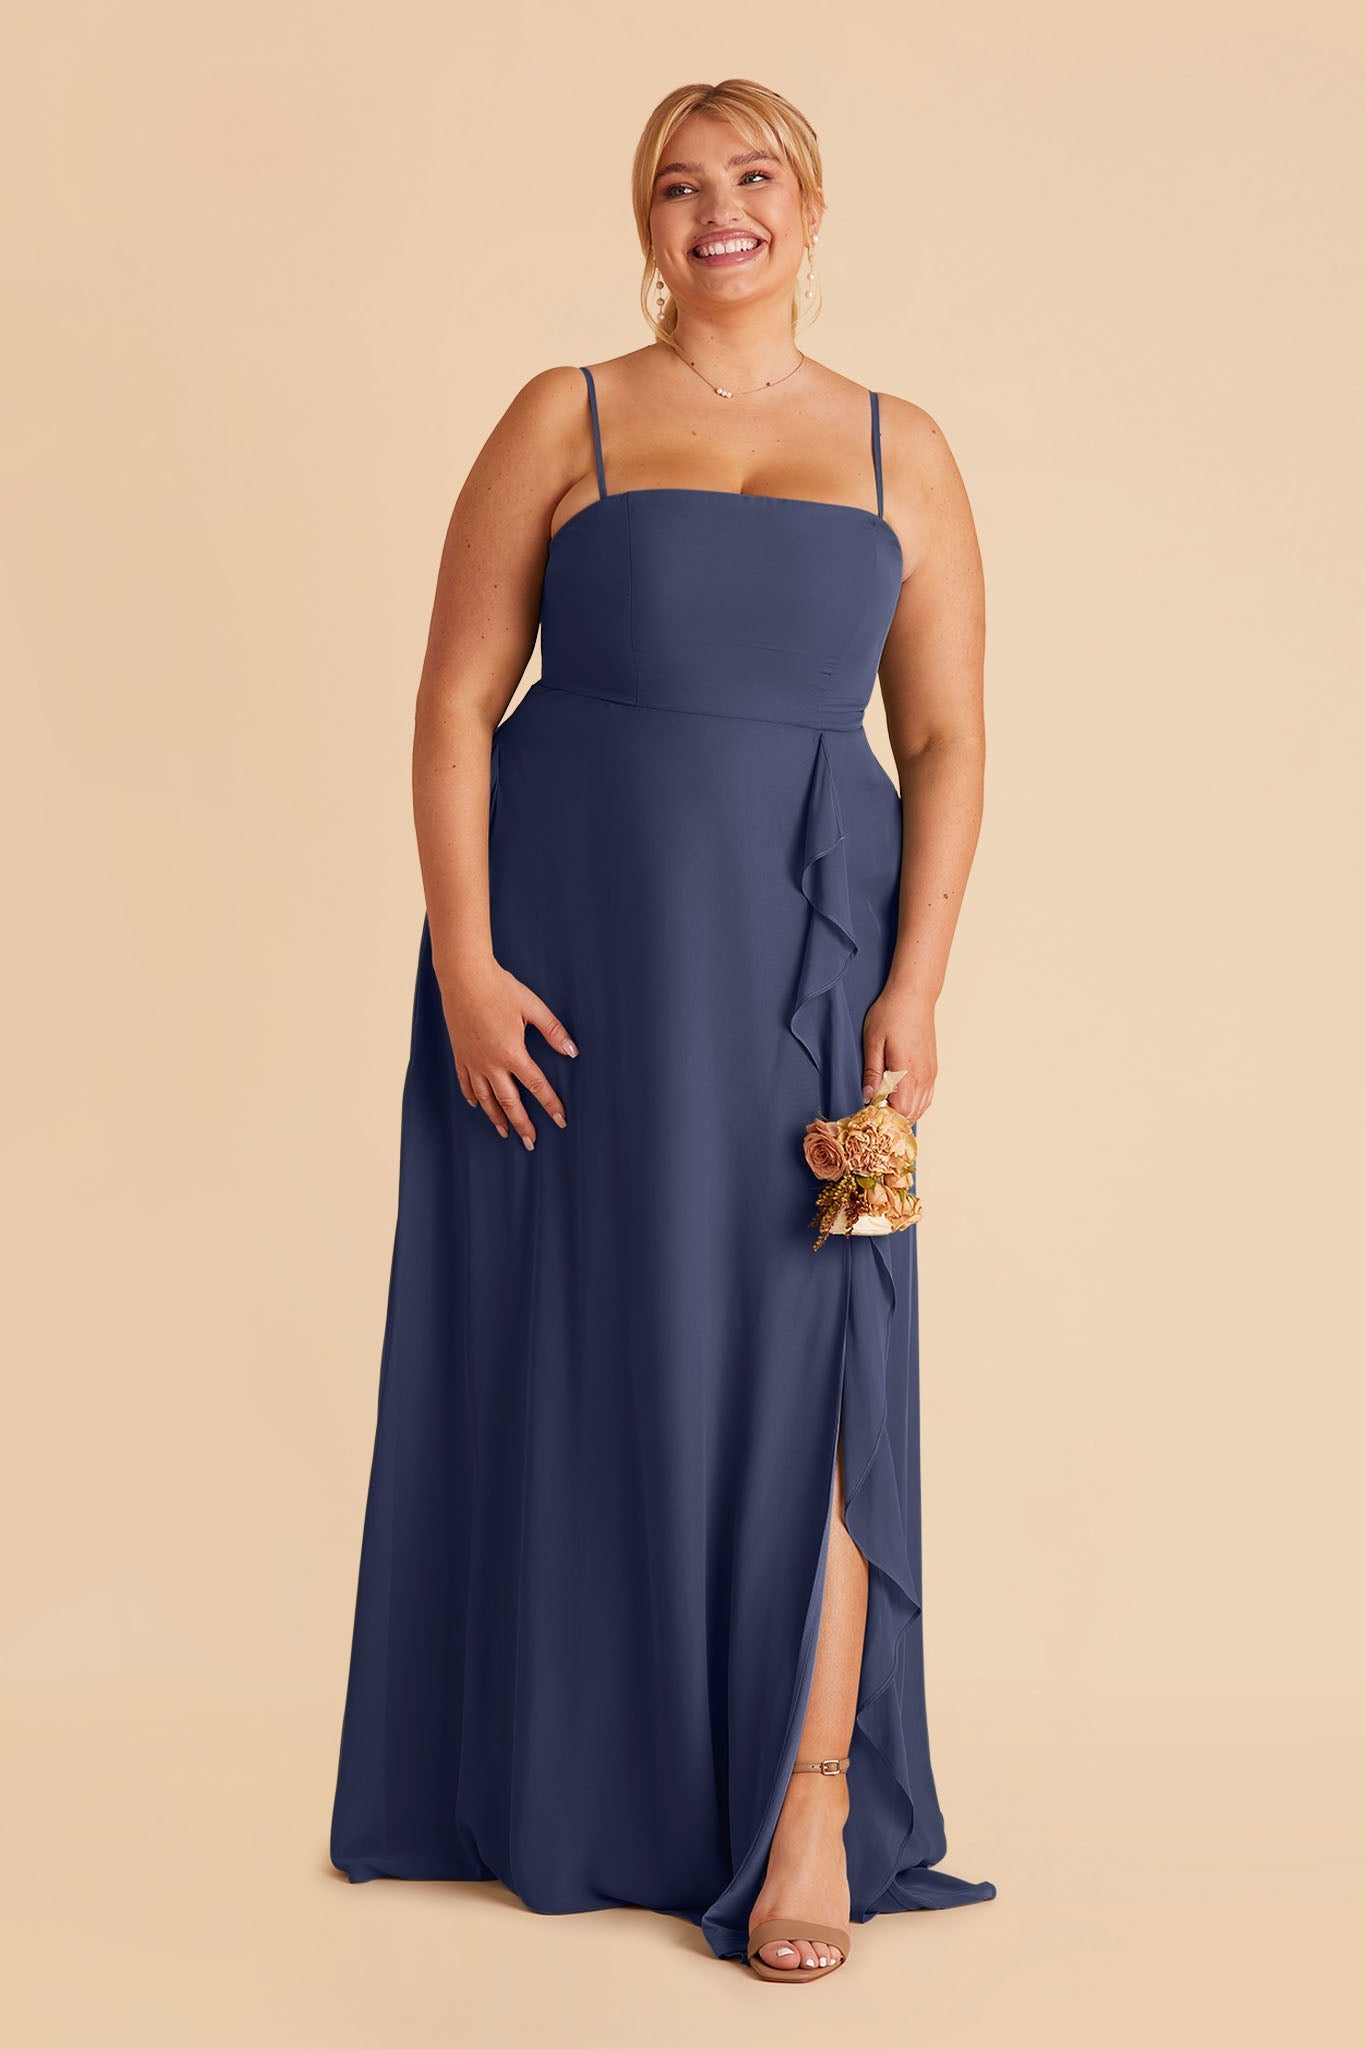 Slate Blue Winnie Convertible Chiffon Dress by Birdy Grey